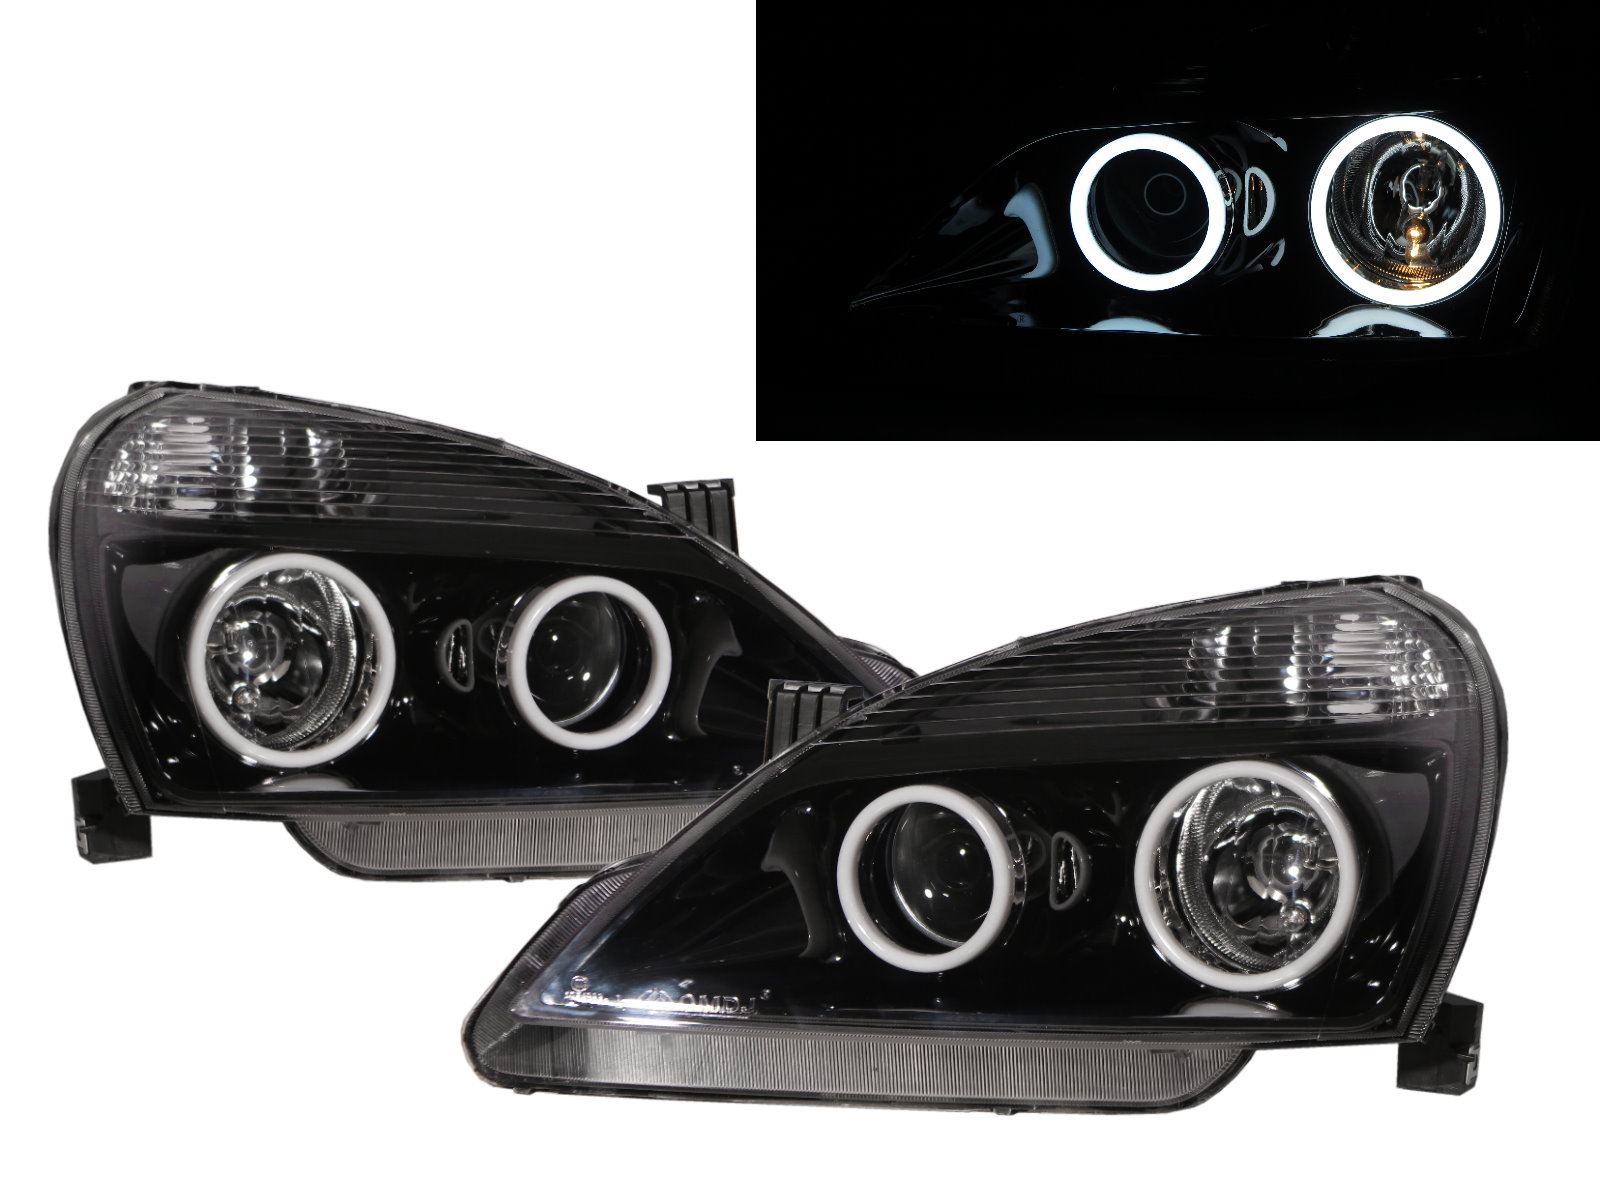 Aerio//Liana 02-07 Sedan//Hatchback 4D//5D Clear Headlight Chrome for SUZUKI LHD